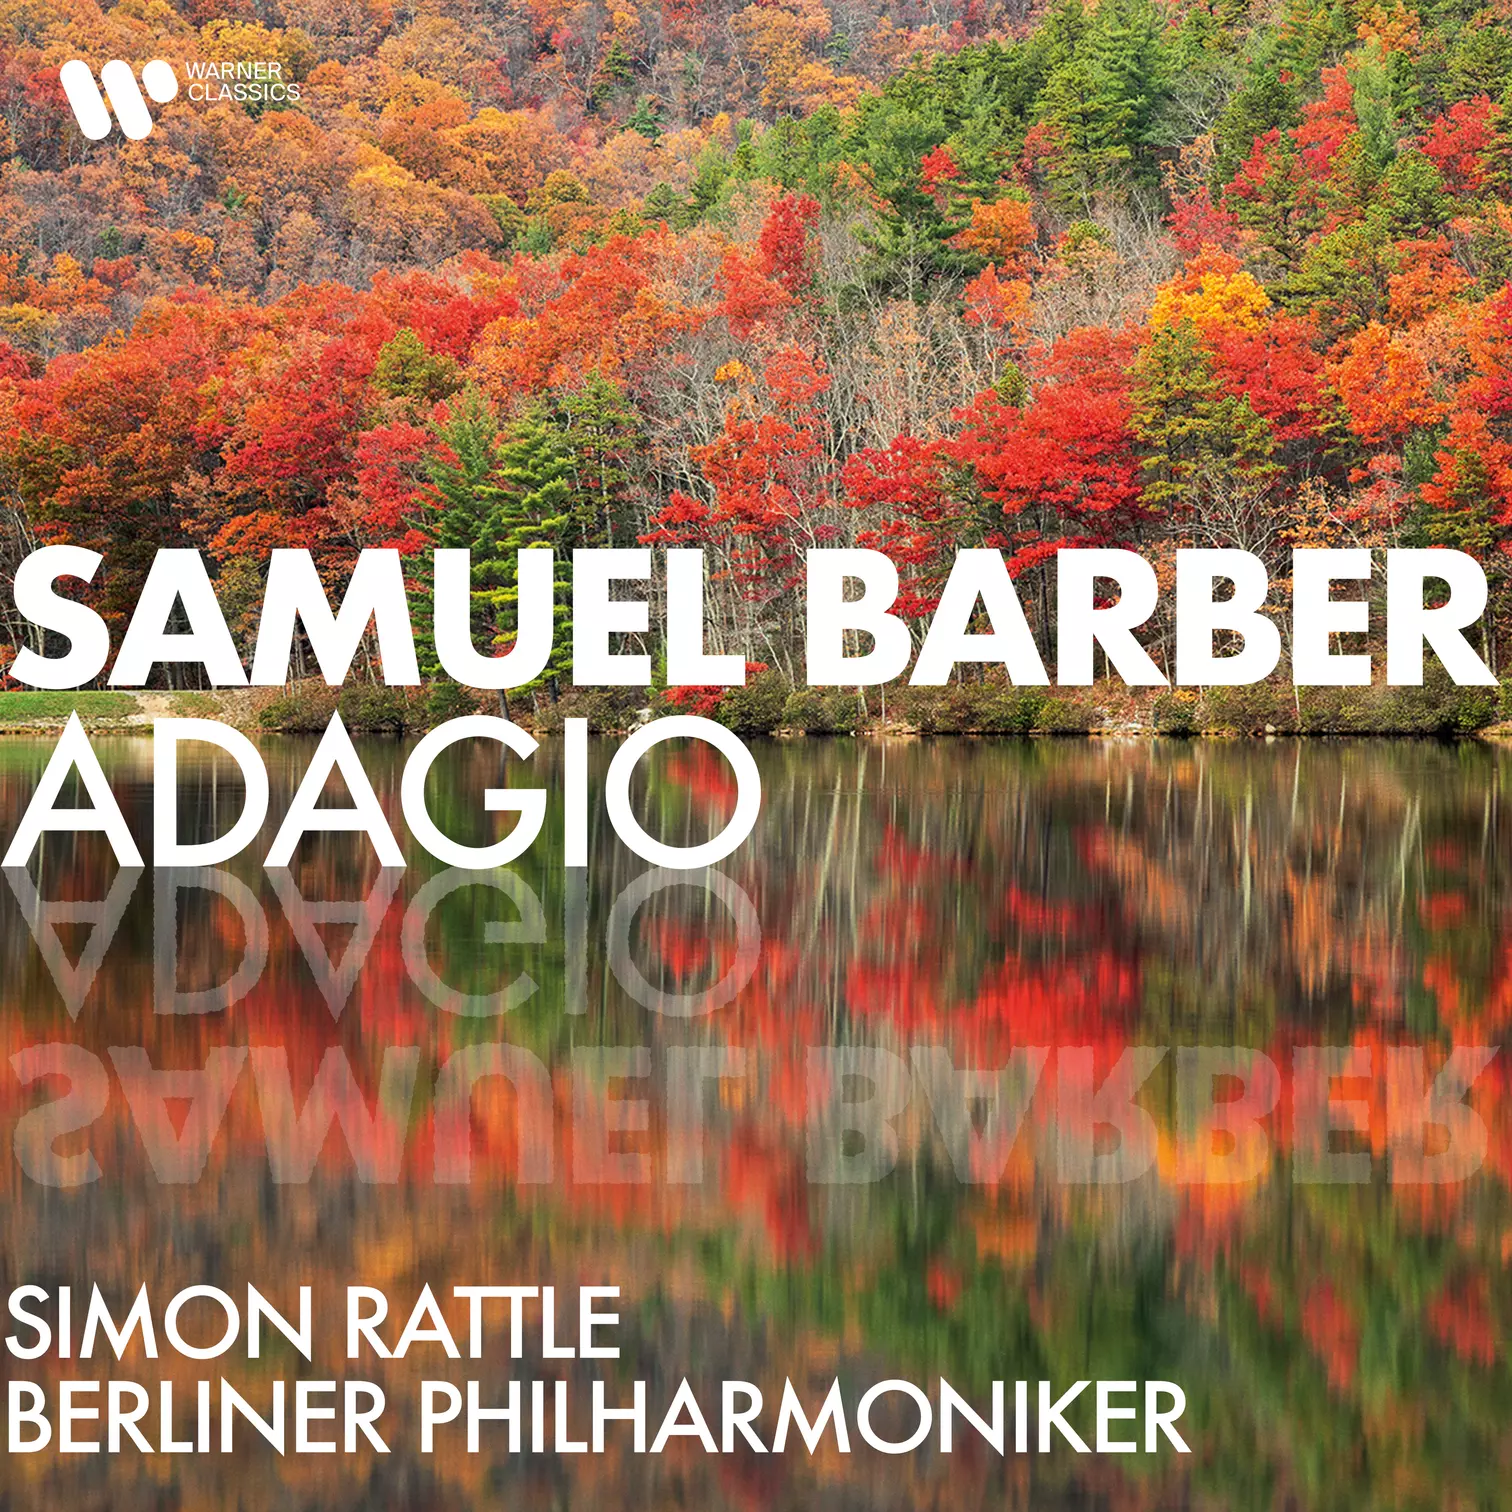 Barber: Adagio for Strings